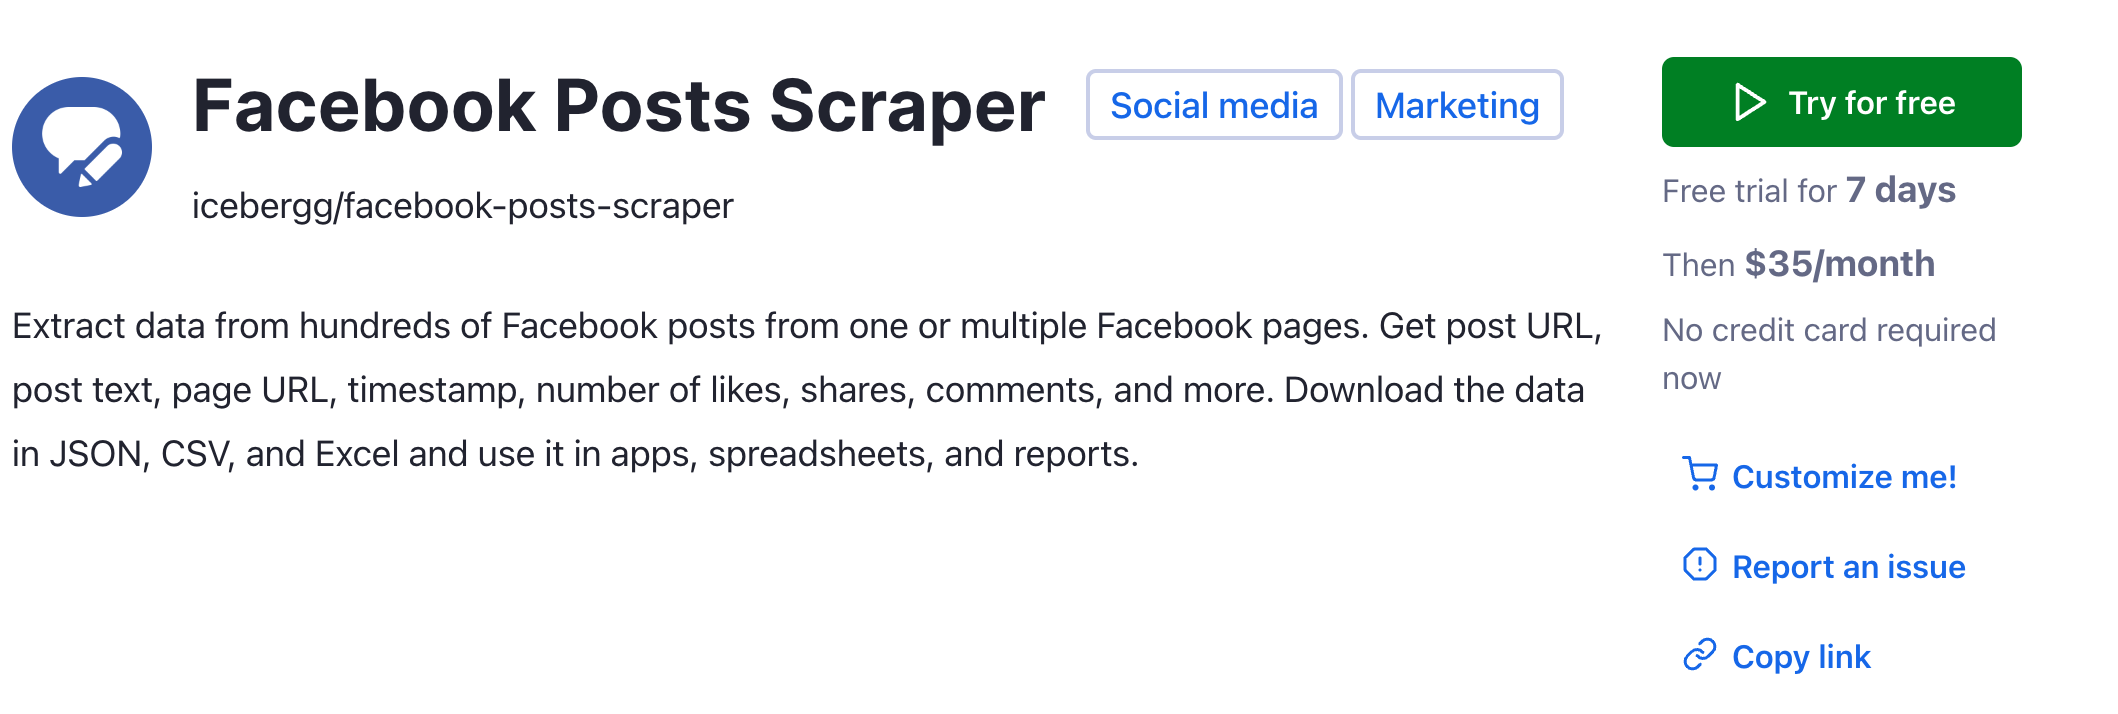 Step 1. Go to Facebook Posts Scraper